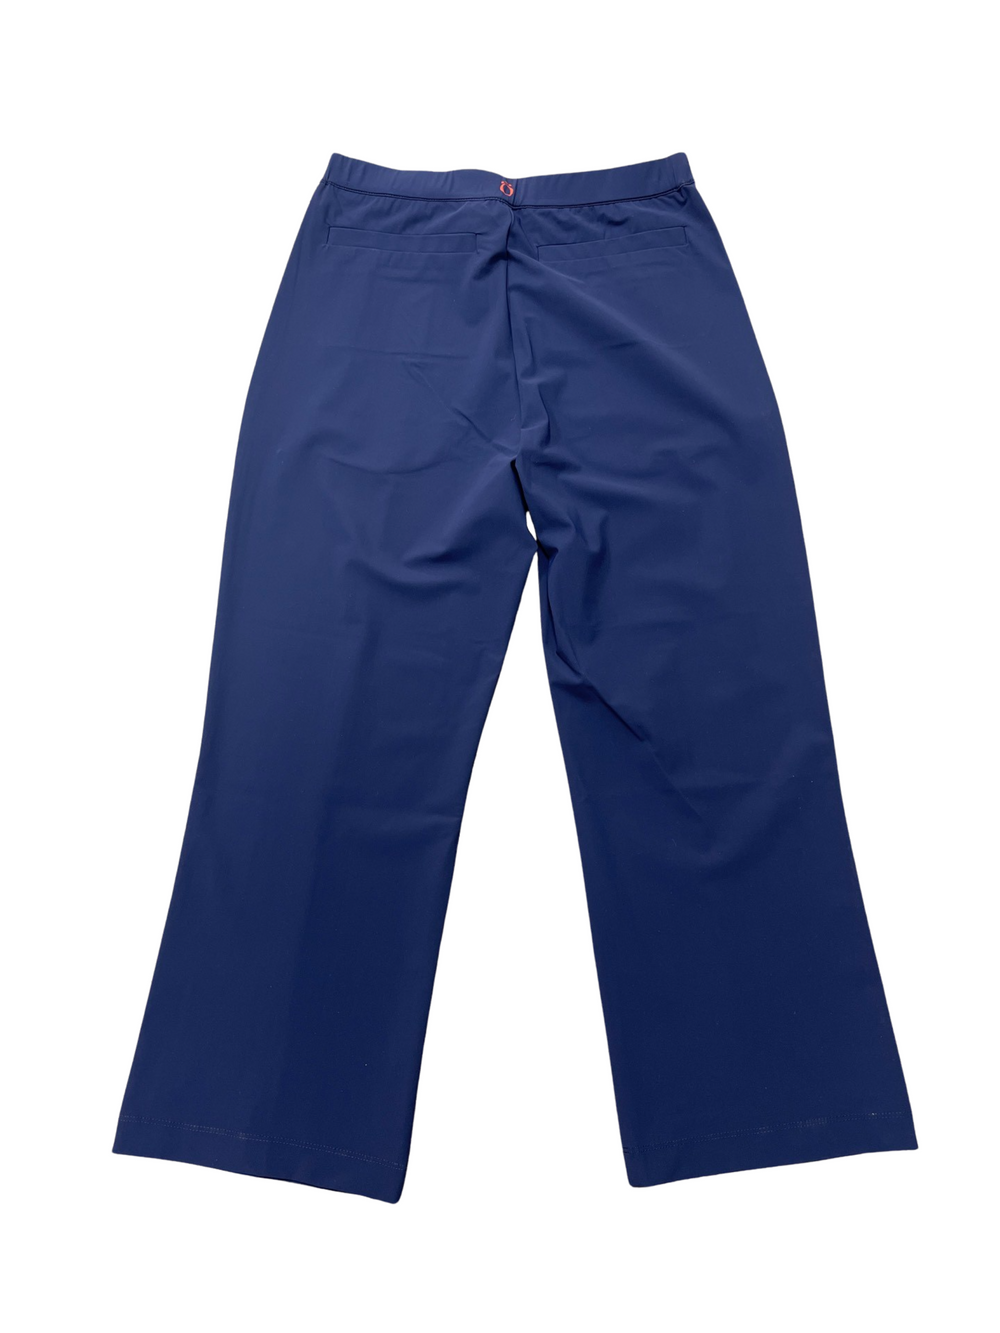 Kinona Tailored Crop Pants - Navy - Size Small - Skorzie